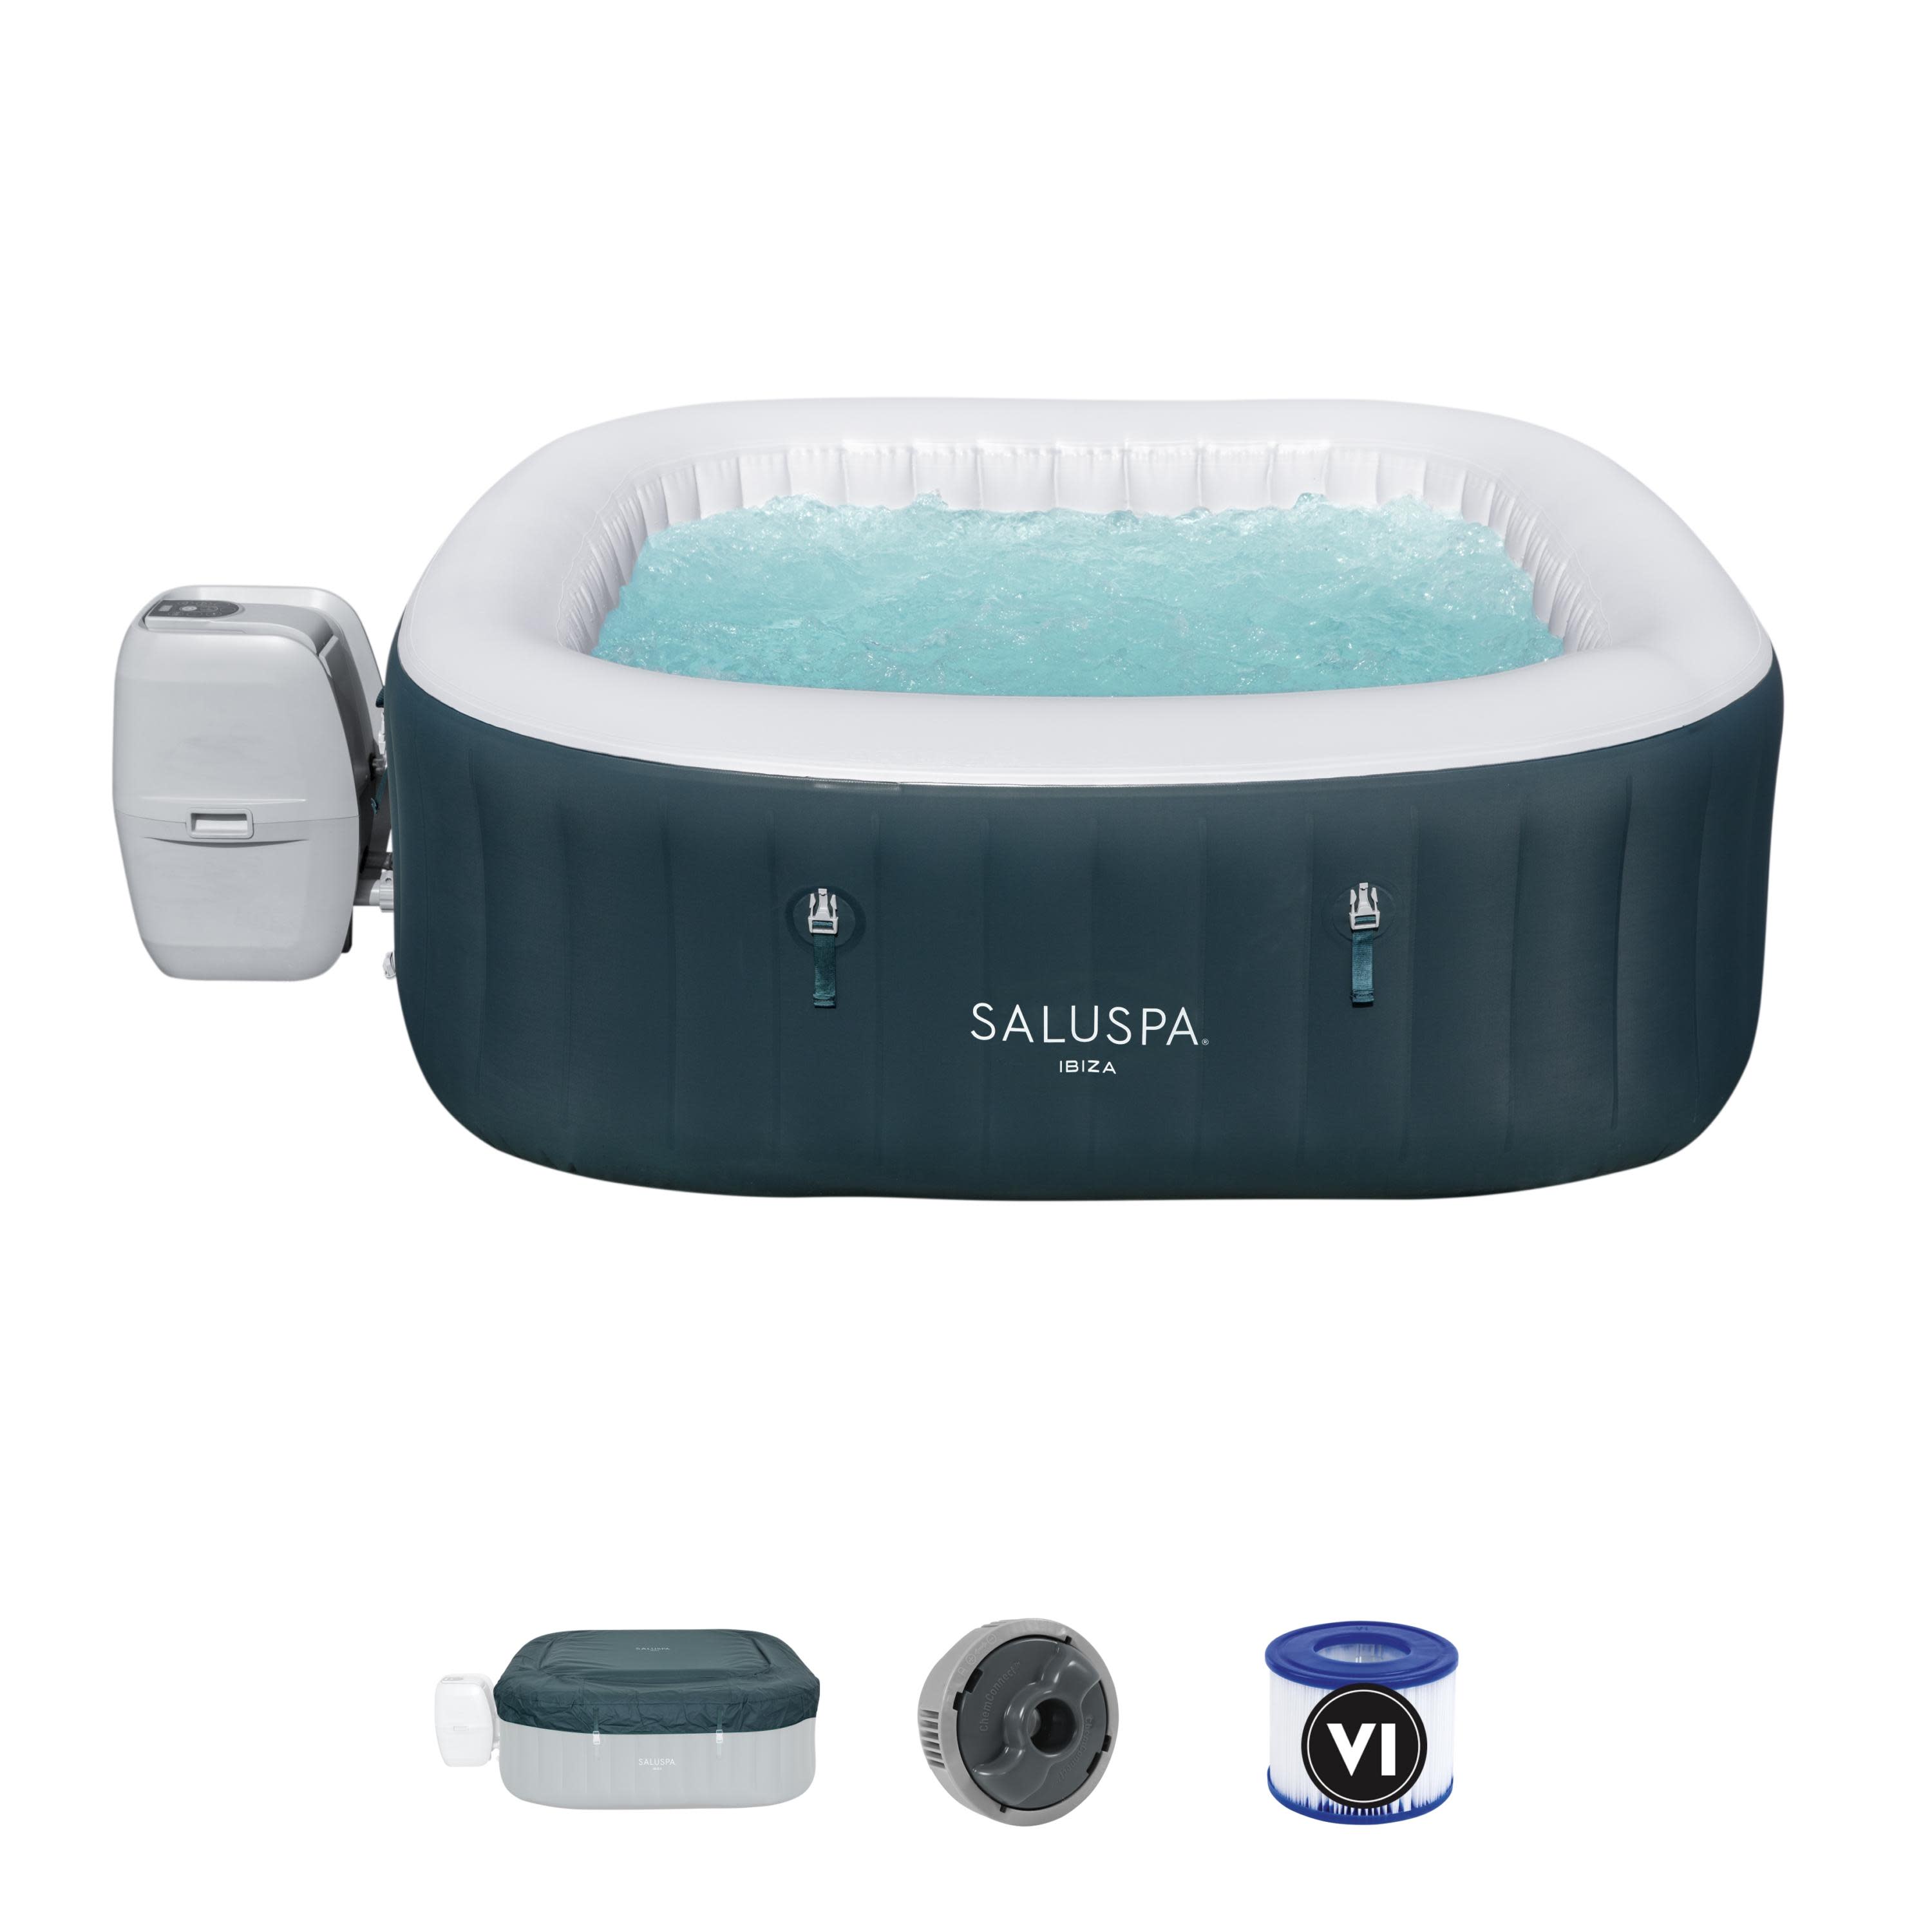 SaluSpa Ibiza AirJet Inflatable Hot Tub Spa 4-6 Person, Maximum Temperature of 104˚F - image 3 of 9